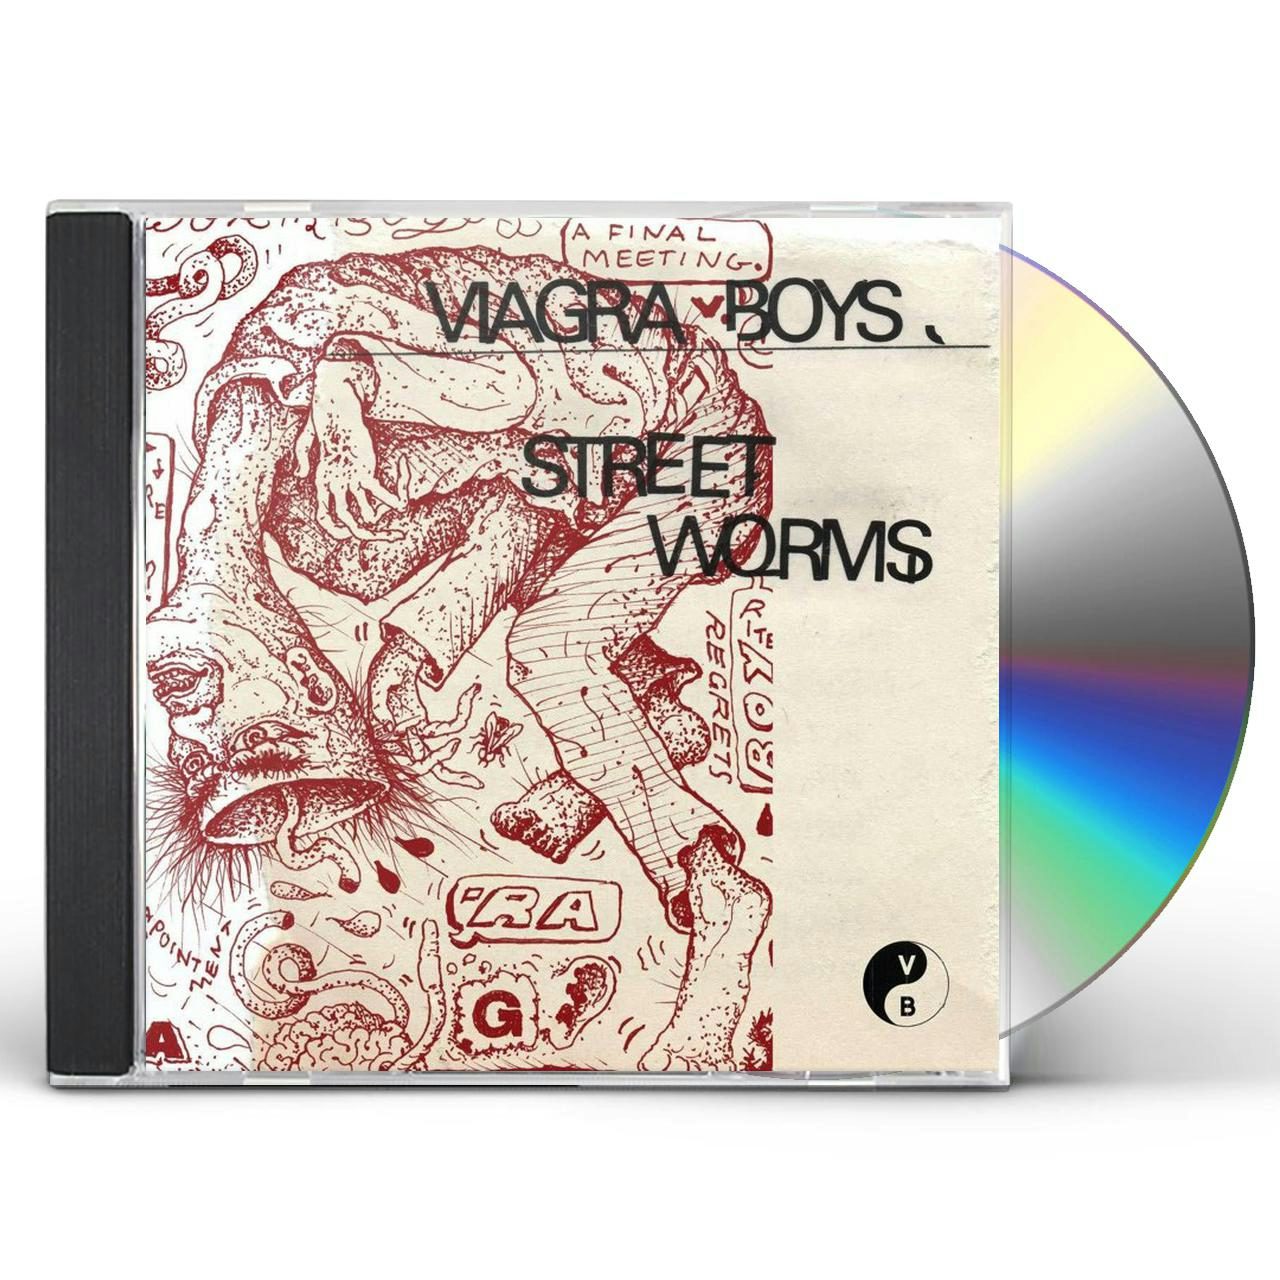 Viagra Boys Street Worms CD